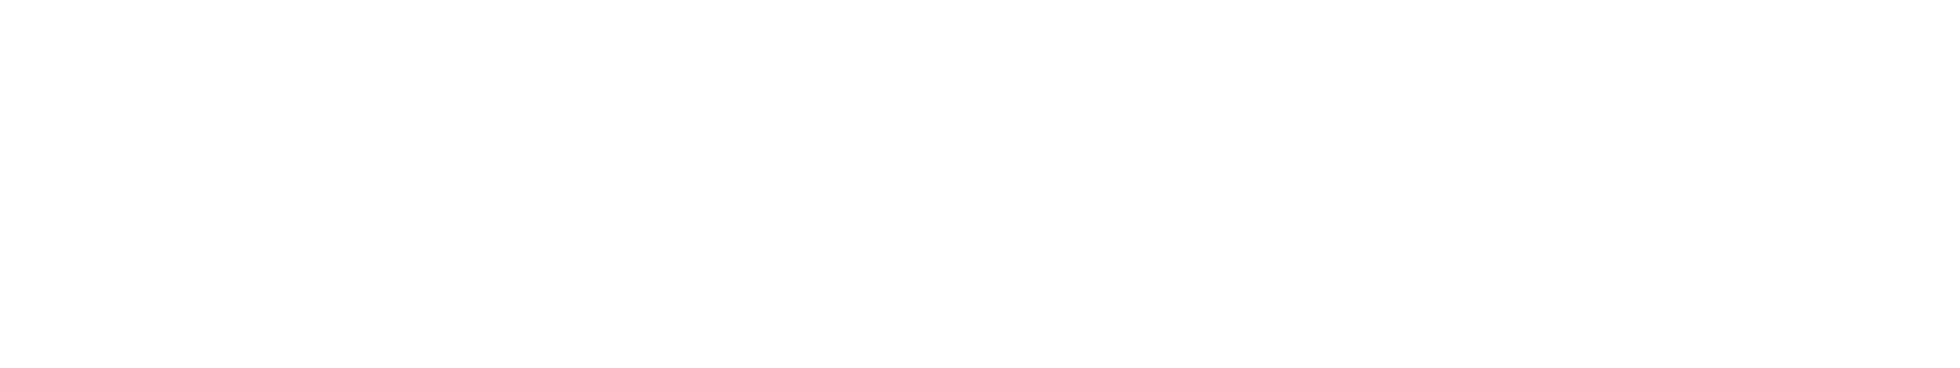 Starburst-Logo_Reverse-White